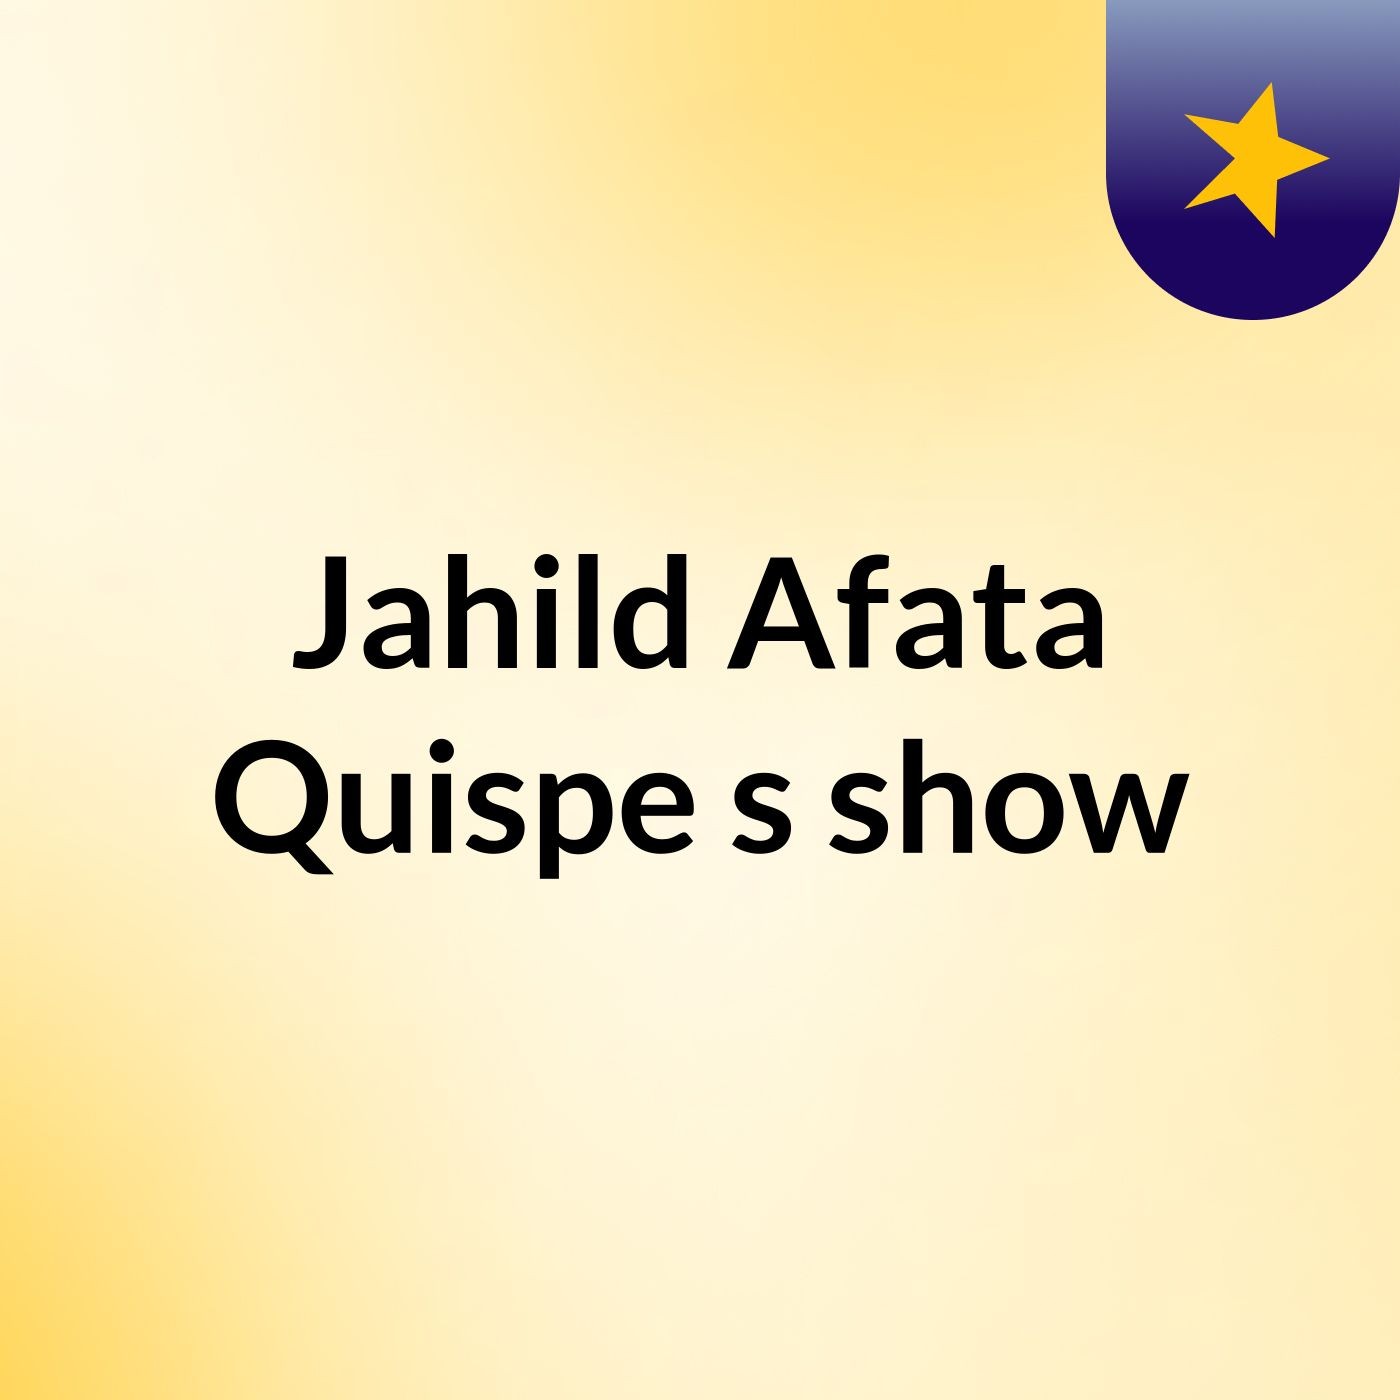 Jahild Afata Quispe's show